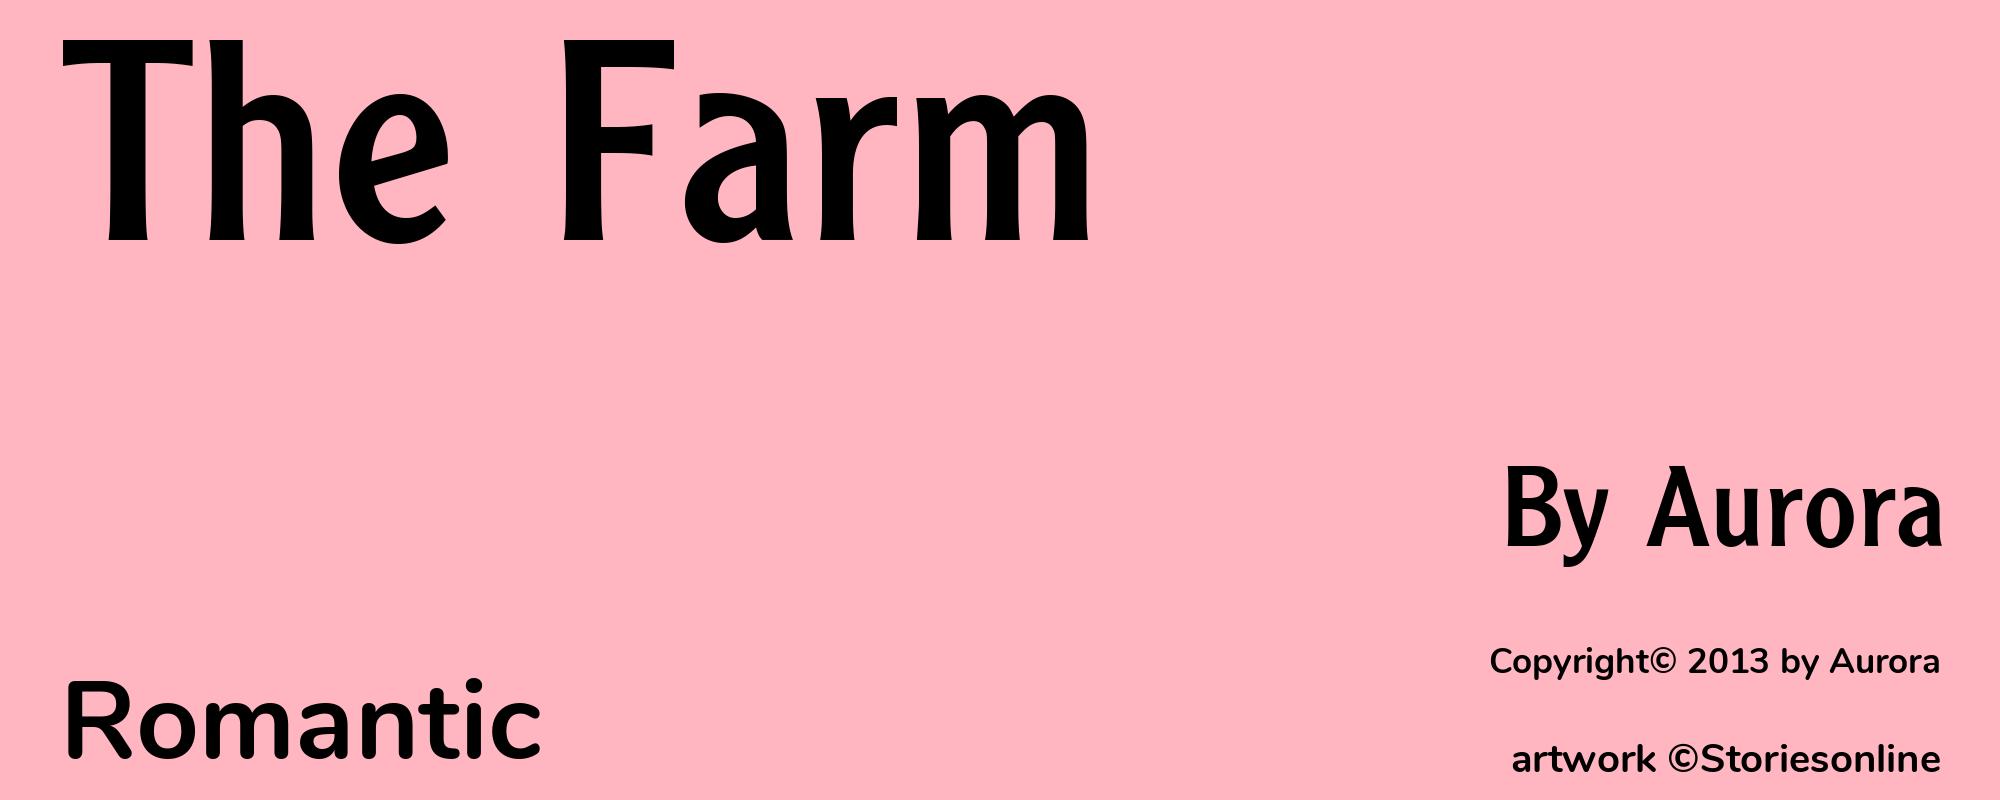 The Farm - Cover